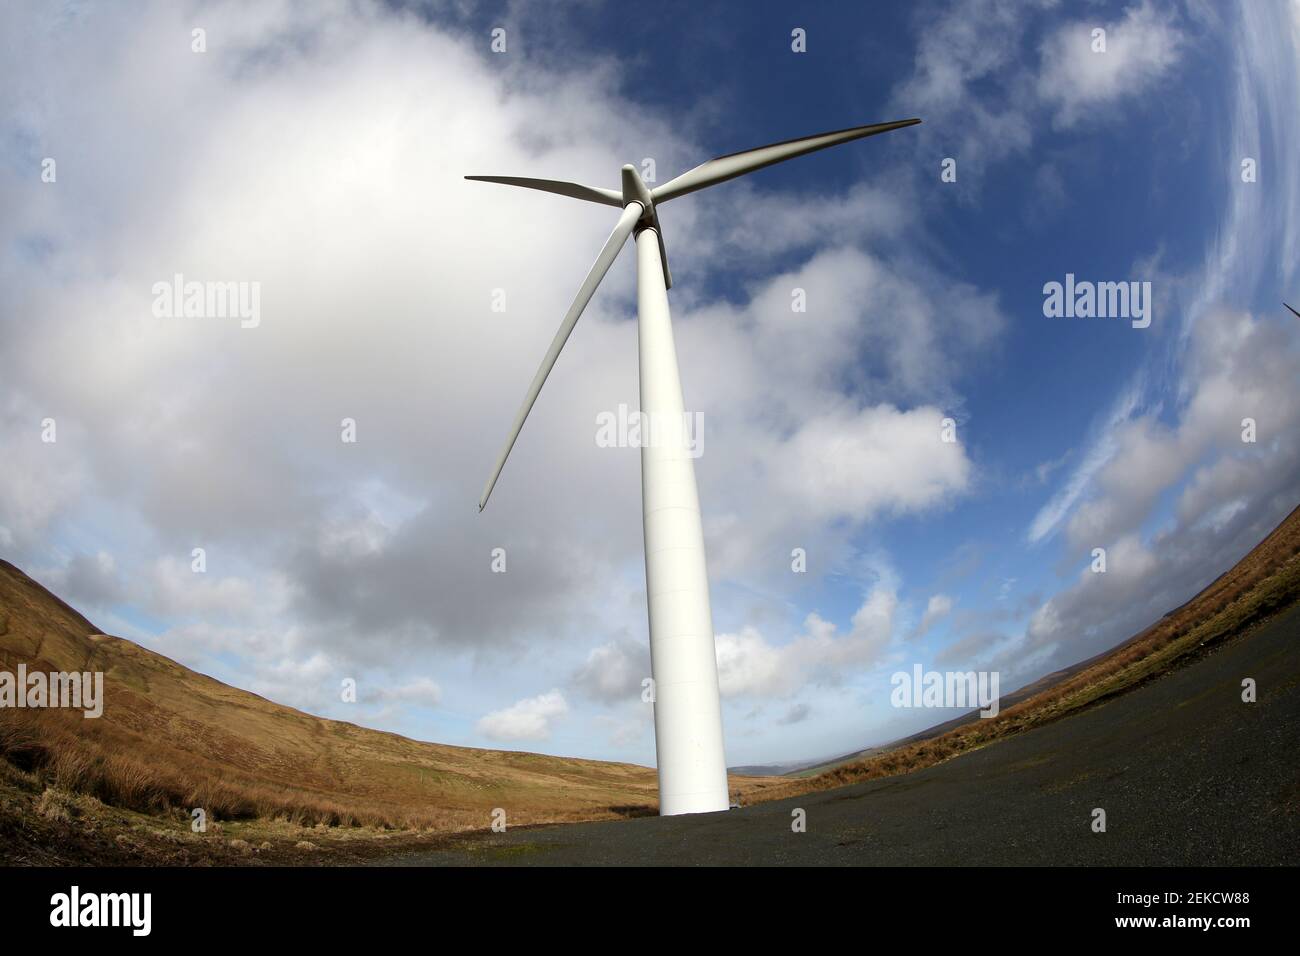 Hadyard Hill Wind Farm, nr Barr, South Ayrshire Scotland, UK la centrale eolica è costituita da 52 turbine eoliche Siemens a tre pale, Foto Stock